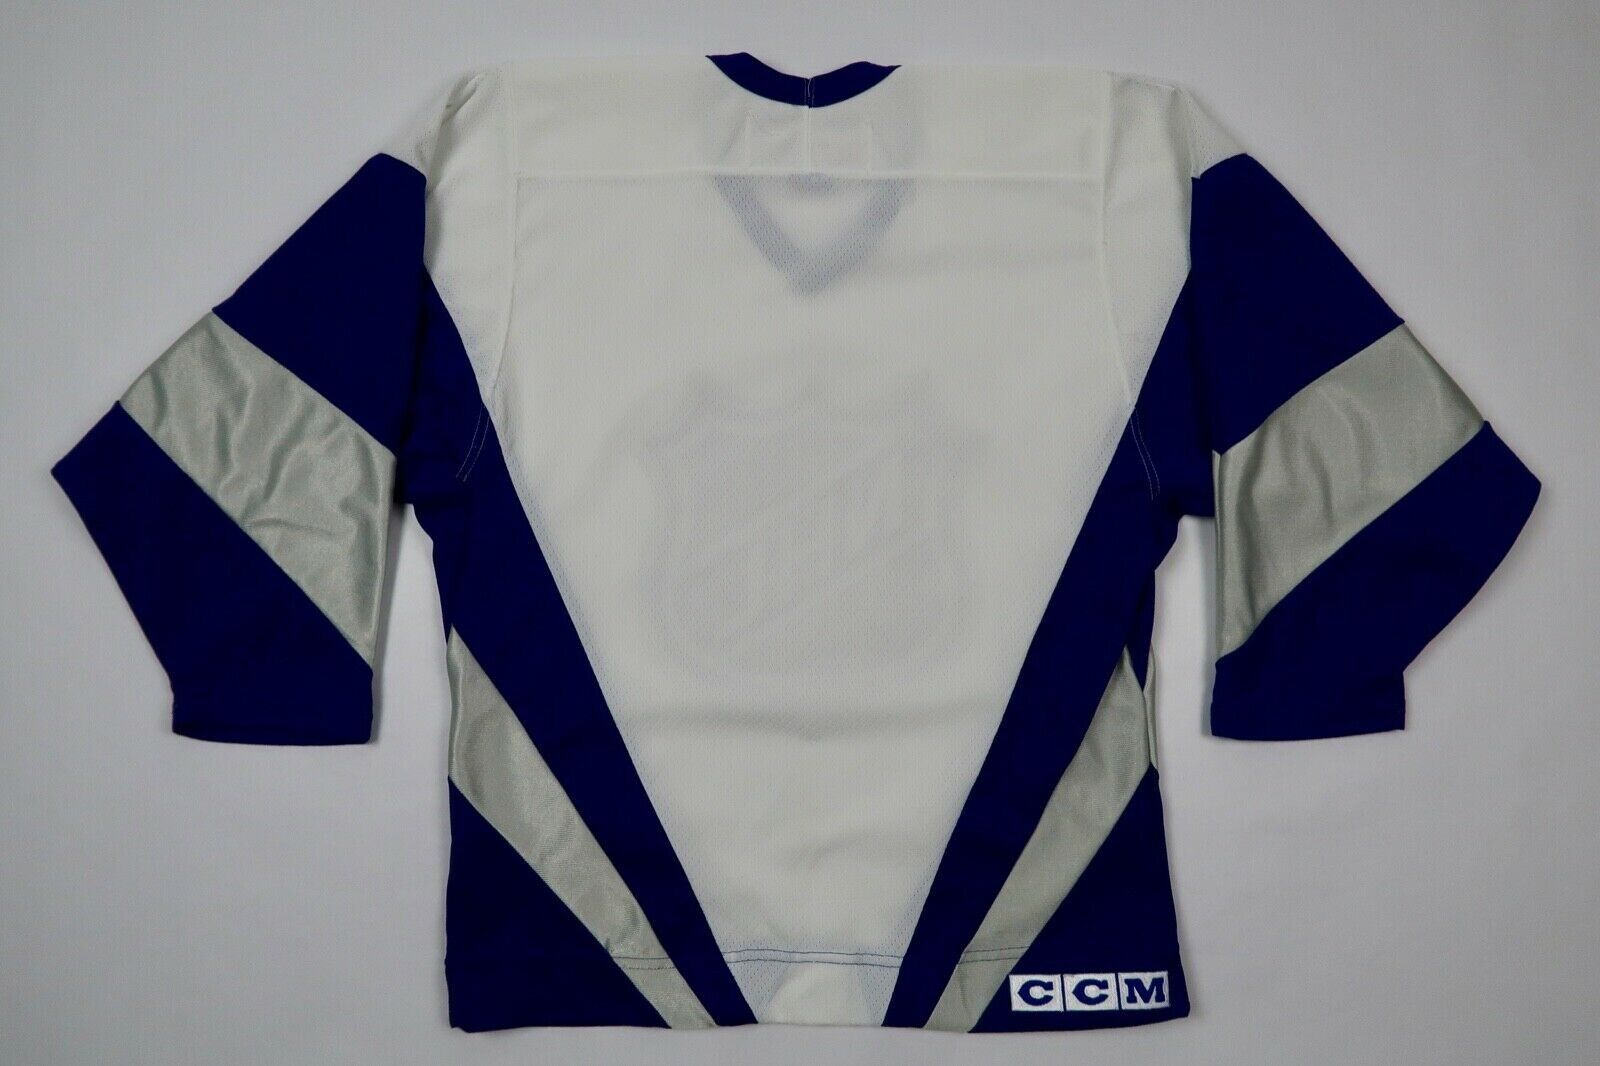 Ccm VTG 1998 NHL All Star Game CCM Hockey Jersey Authentic Rare 90s Size US S / EU 44-46 / 1 - 5 Thumbnail